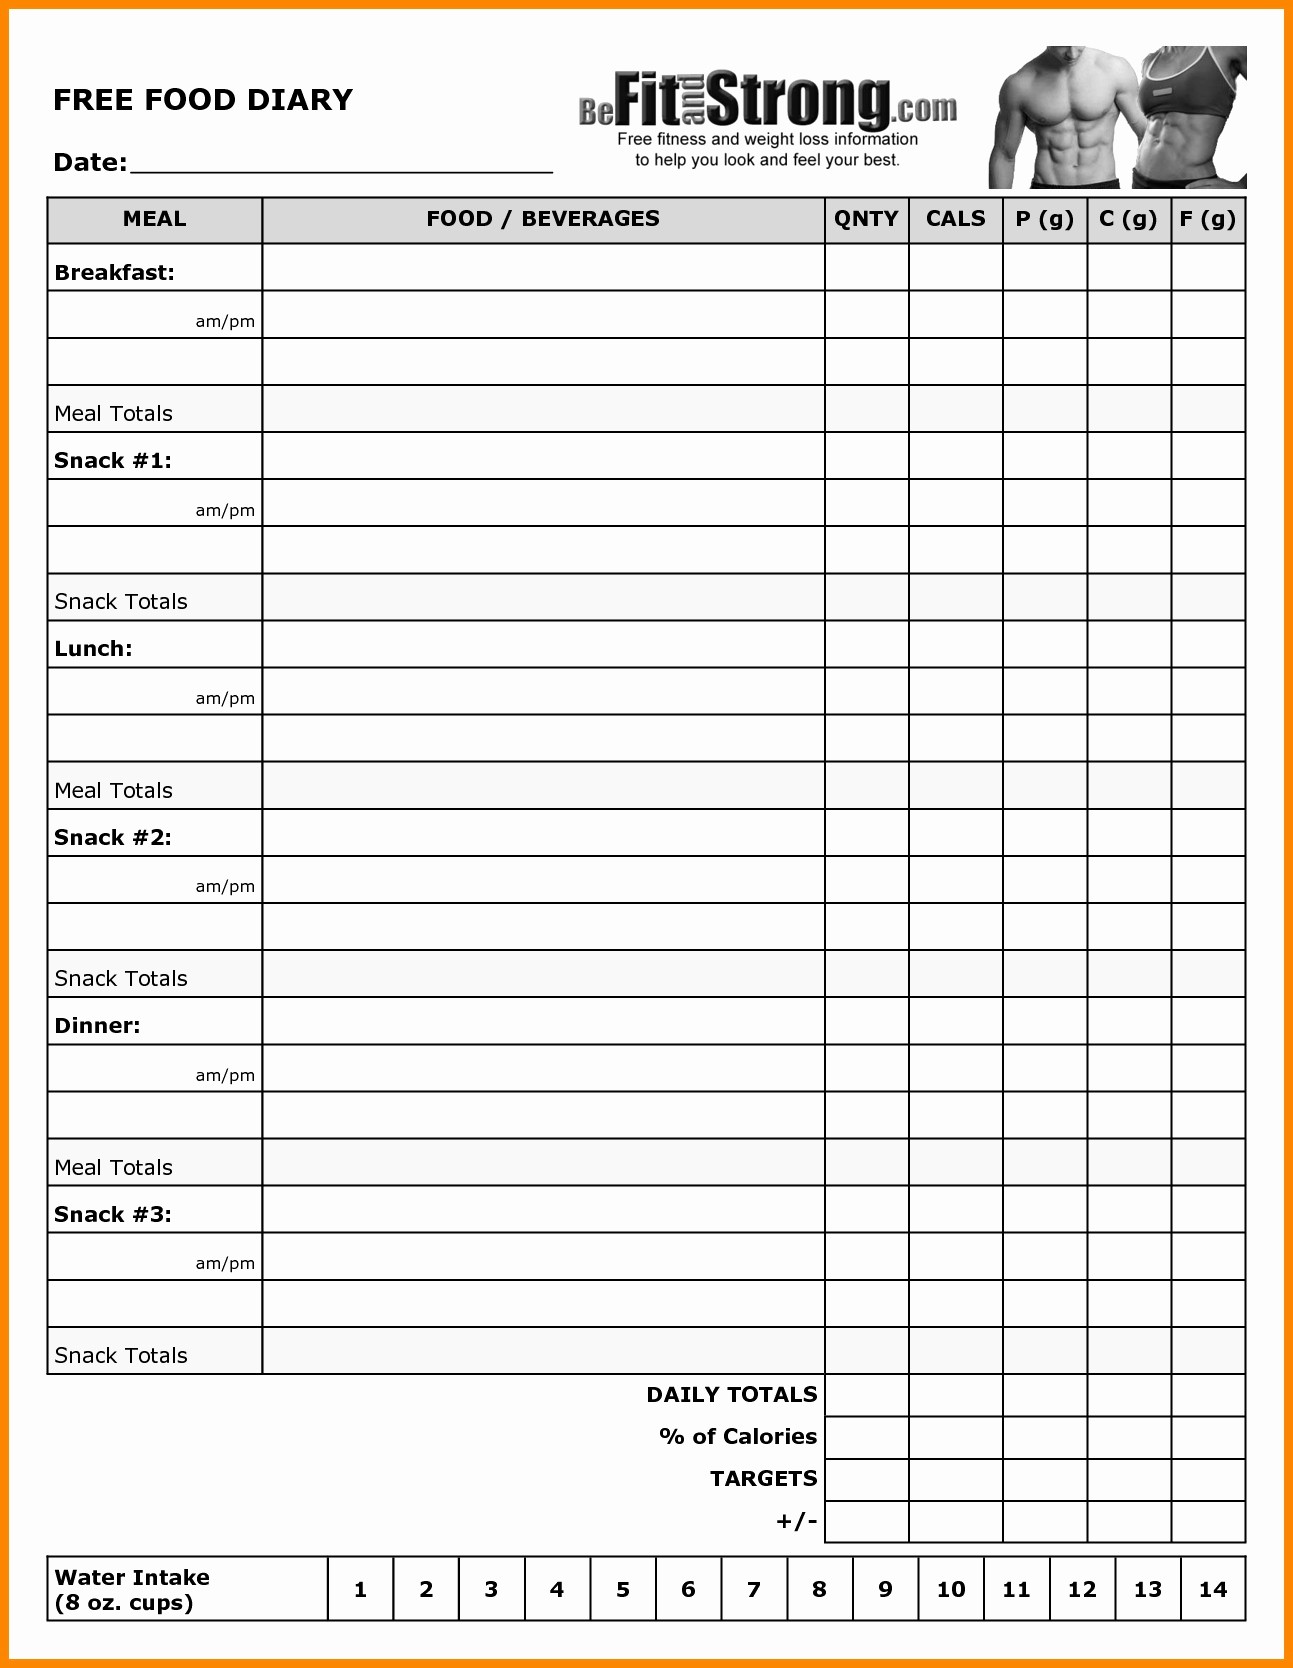 Fantasy Football Draft Board Template Inspirational Document Excel Spreadsheet